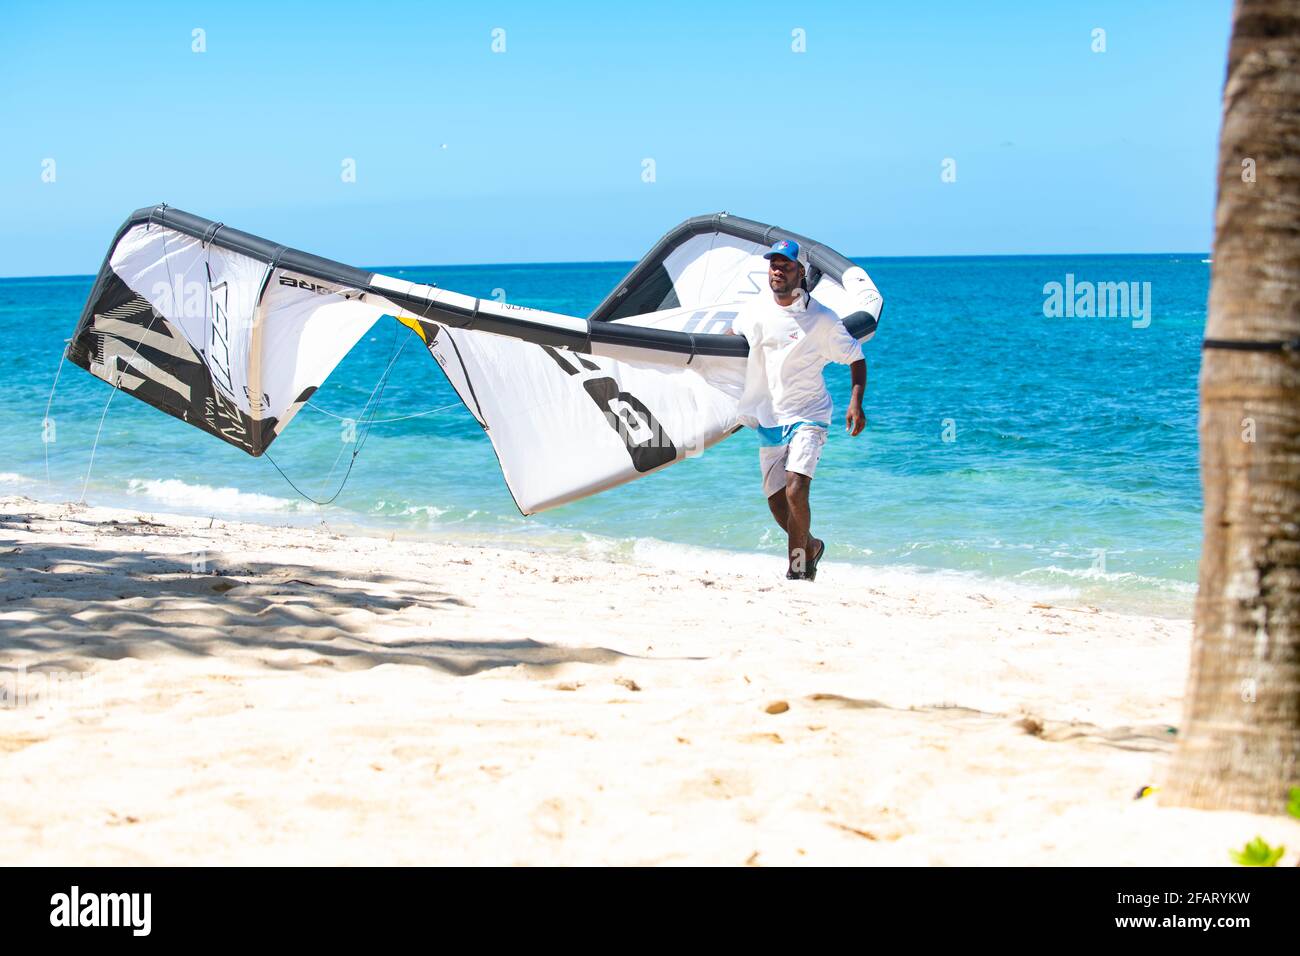 Kitesurfen in der Karibik Stockfoto